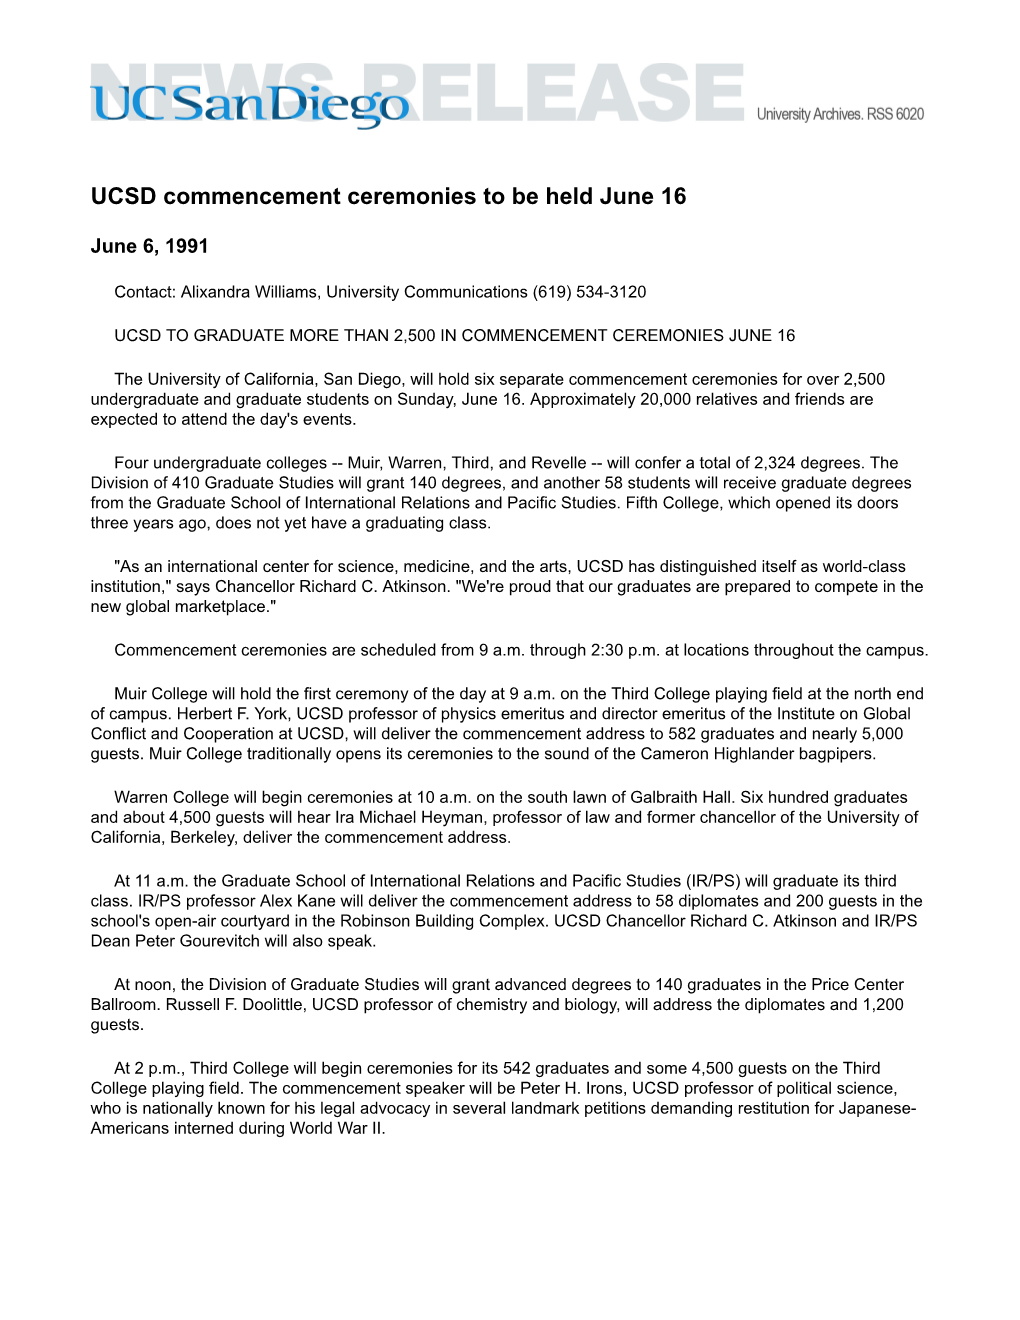 UCSD Commencement Ceremonies to Be Held June 16